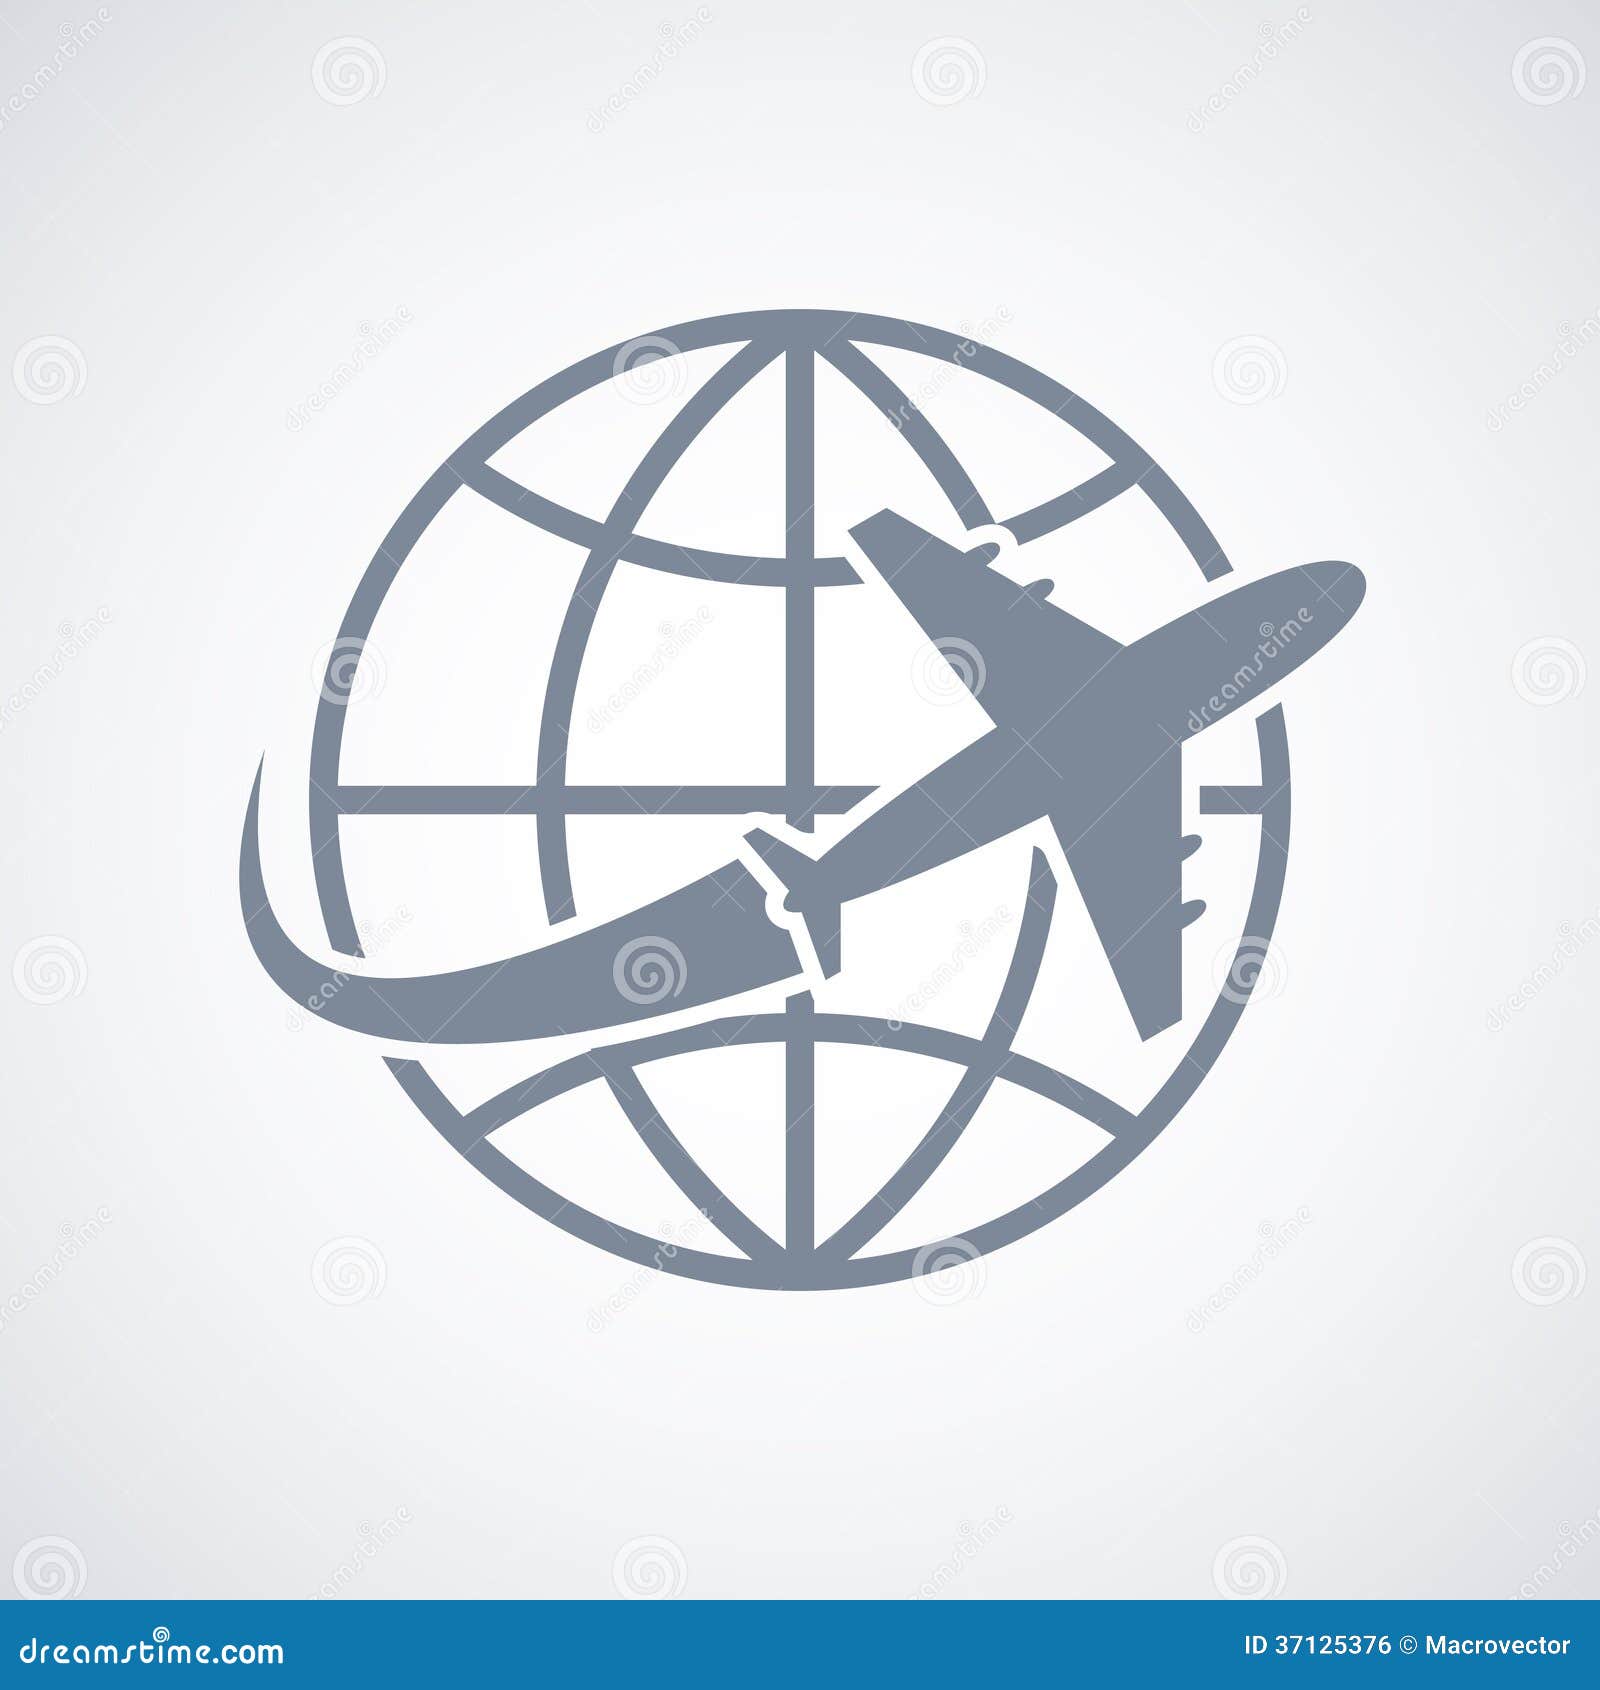 globe and plane travel icon